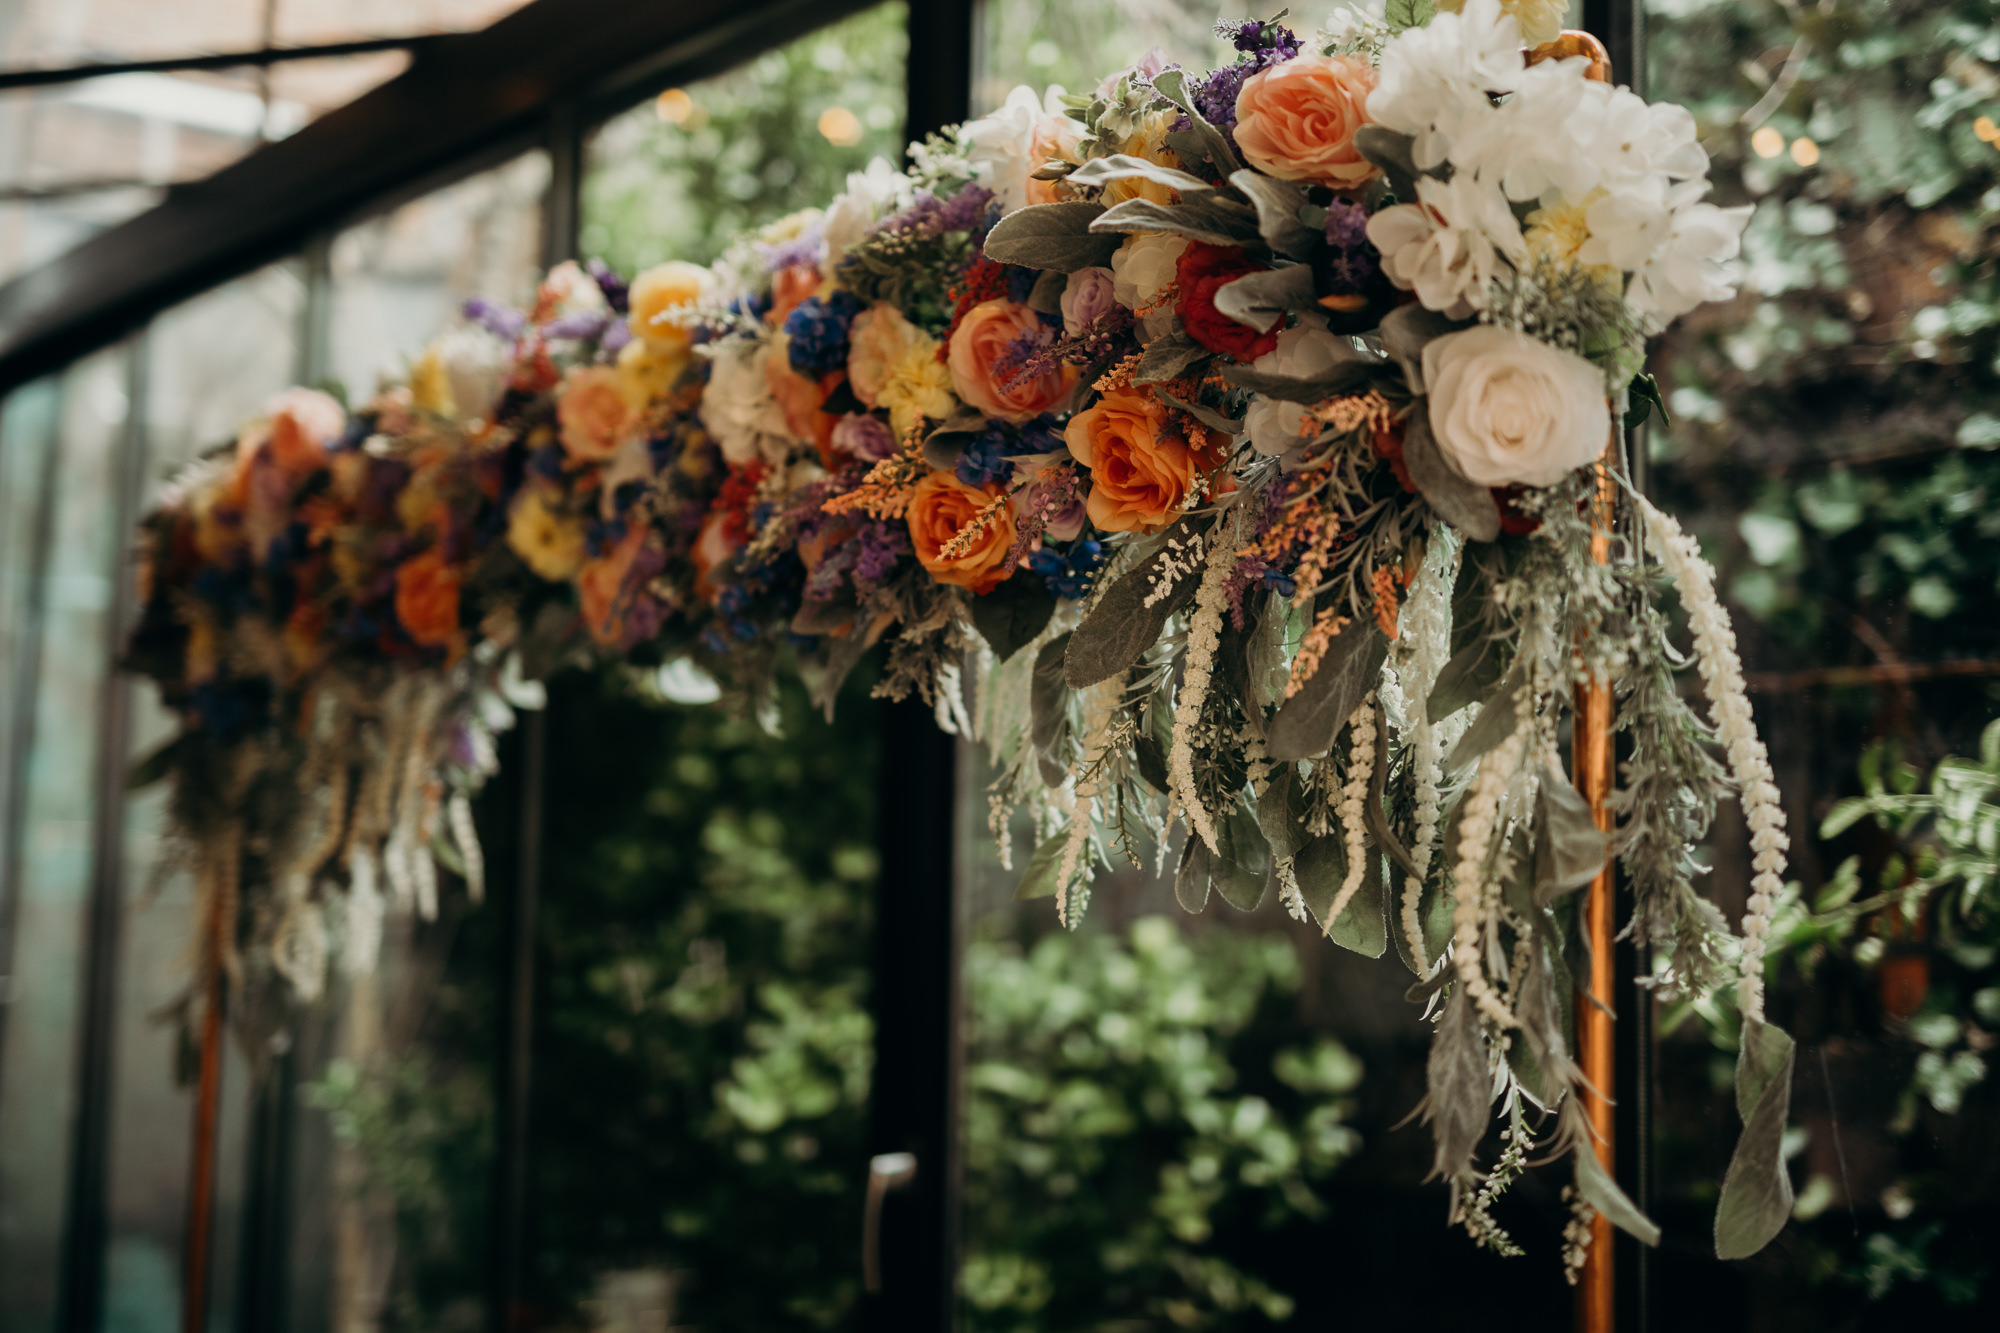 a floral wedding arch at mymoon in brooklyn, new york